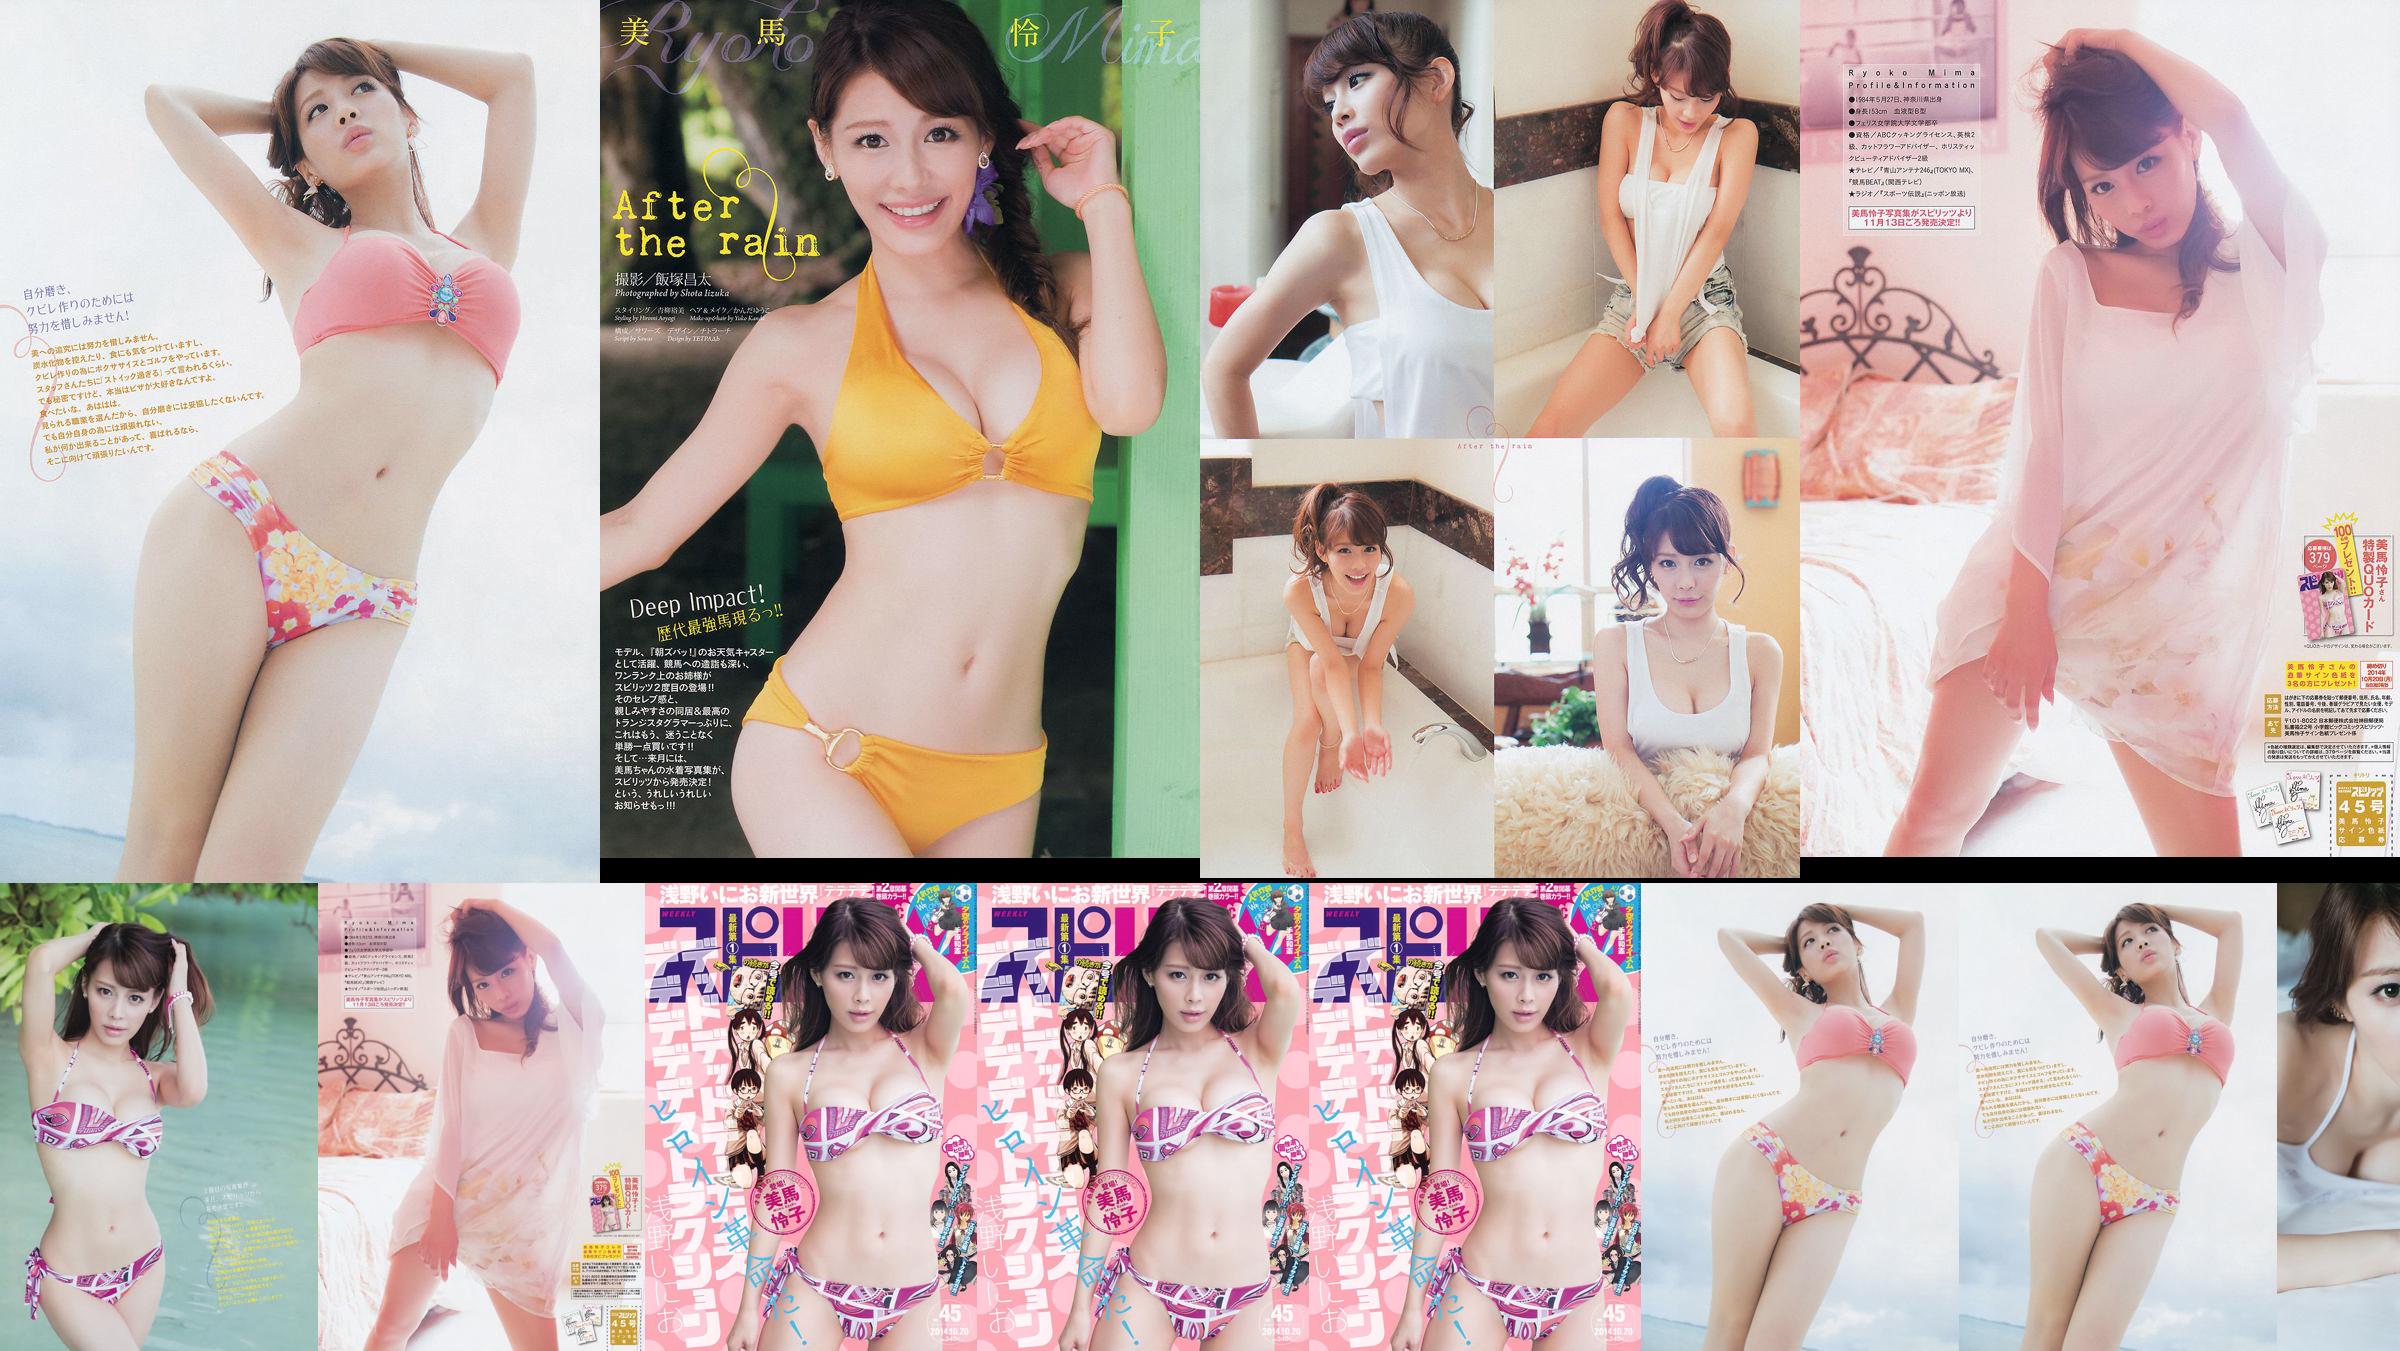 [Semangat Komik Besar Mingguan] Mima Reiko 2014 Majalah Foto No.45 No.86431b Halaman 1